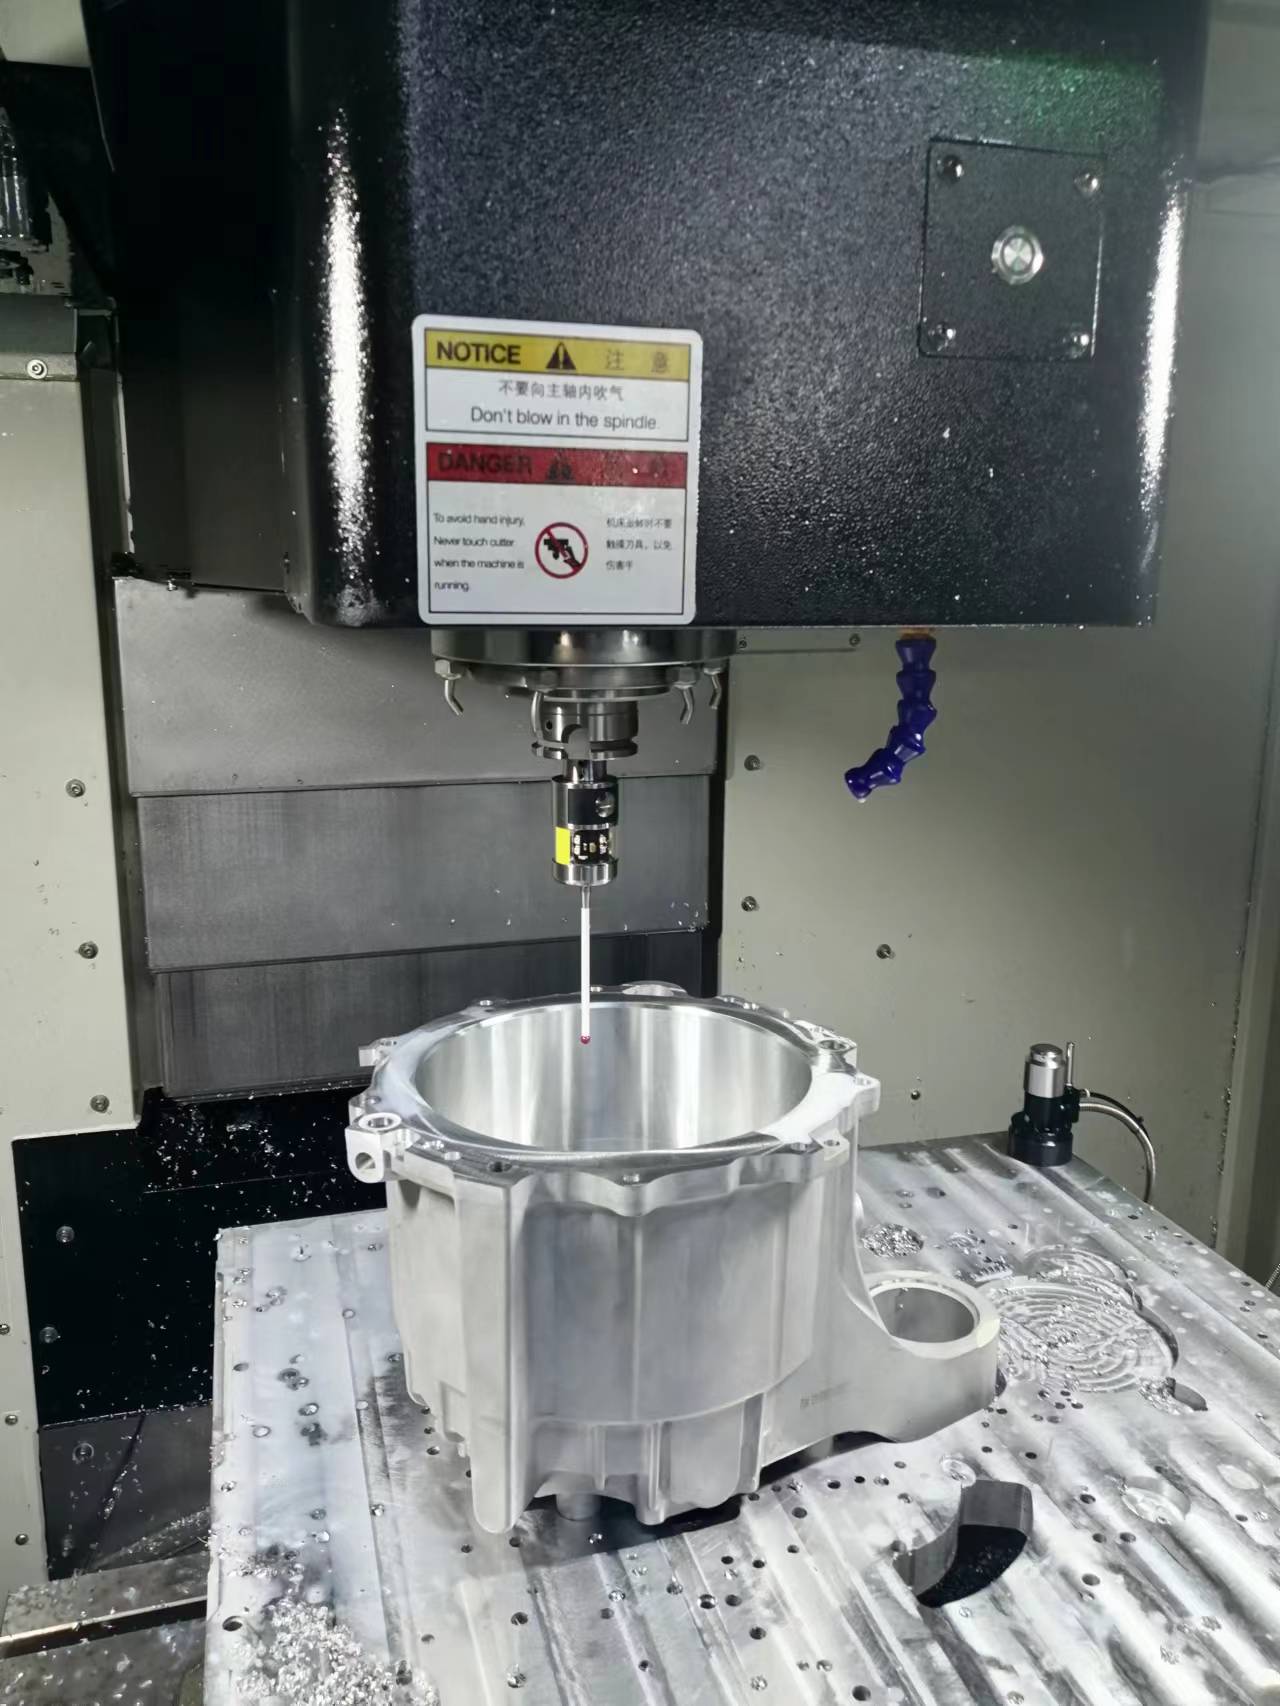 CNC center ultra-high precision machine tool na sumusukat sa CP41 (2)